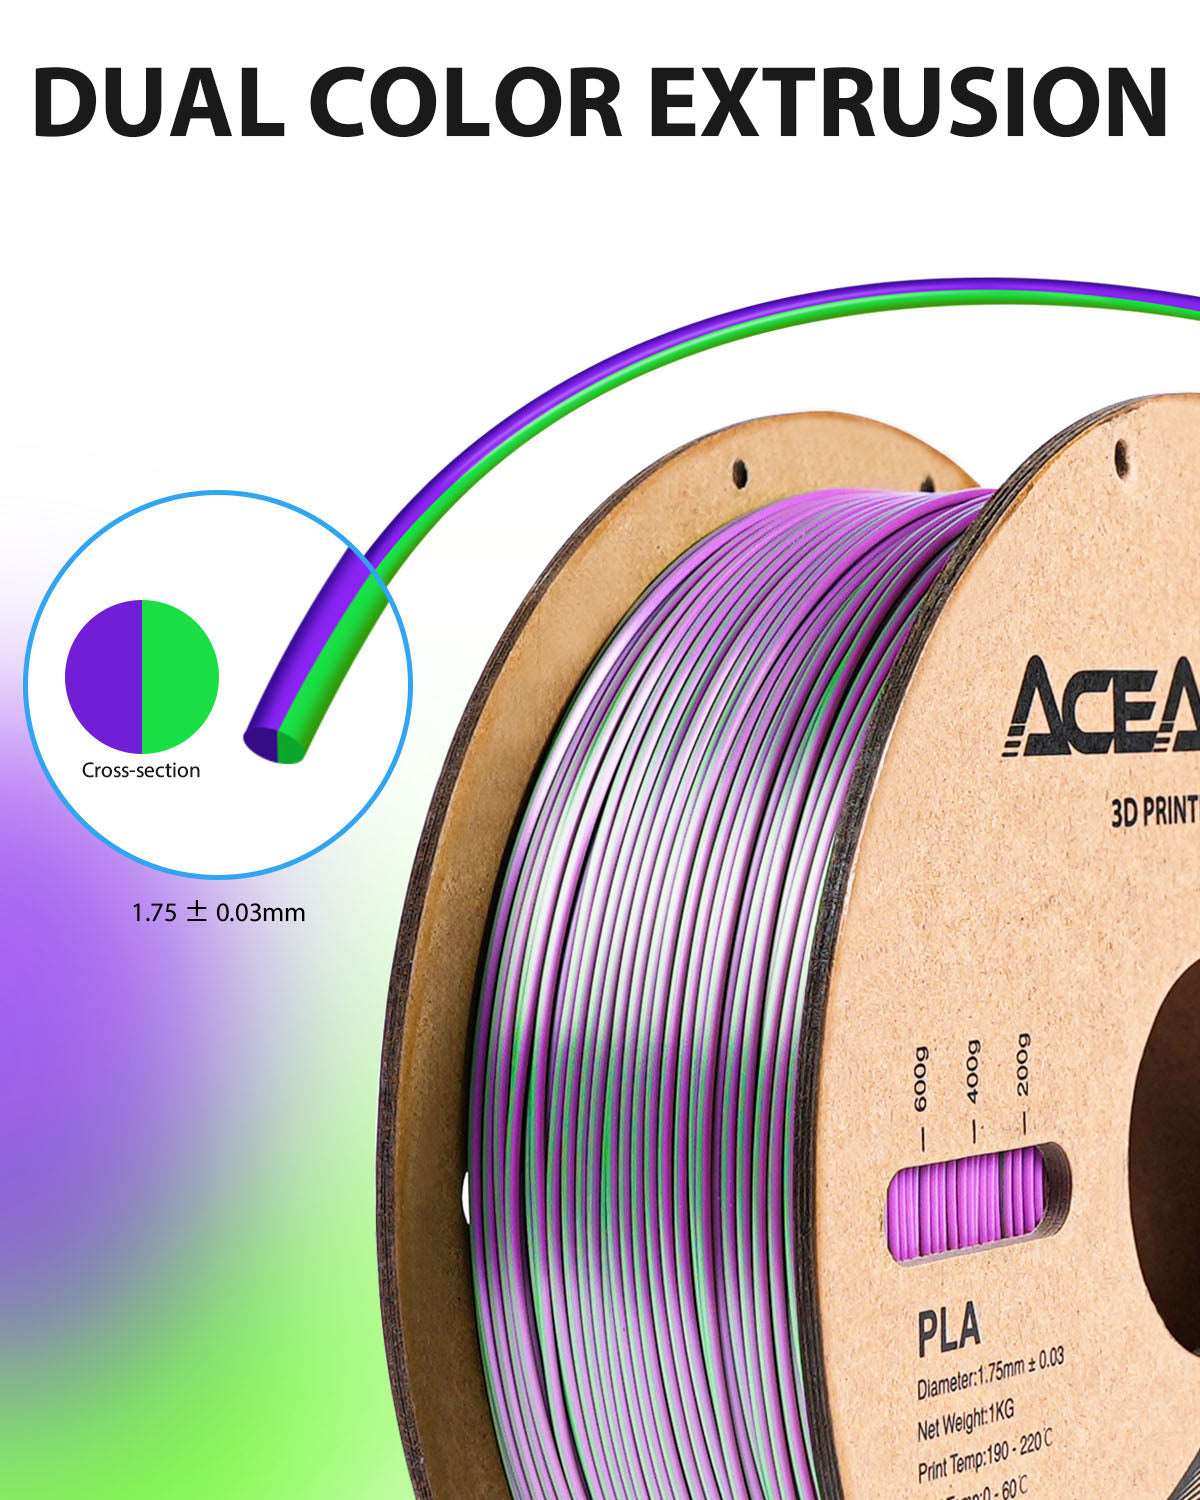 Aceaddity PETG Filament 1.75mm, 1kg Strong PETG 3D Printer Filament  Dimensional Accuracy +/- 0.03mm